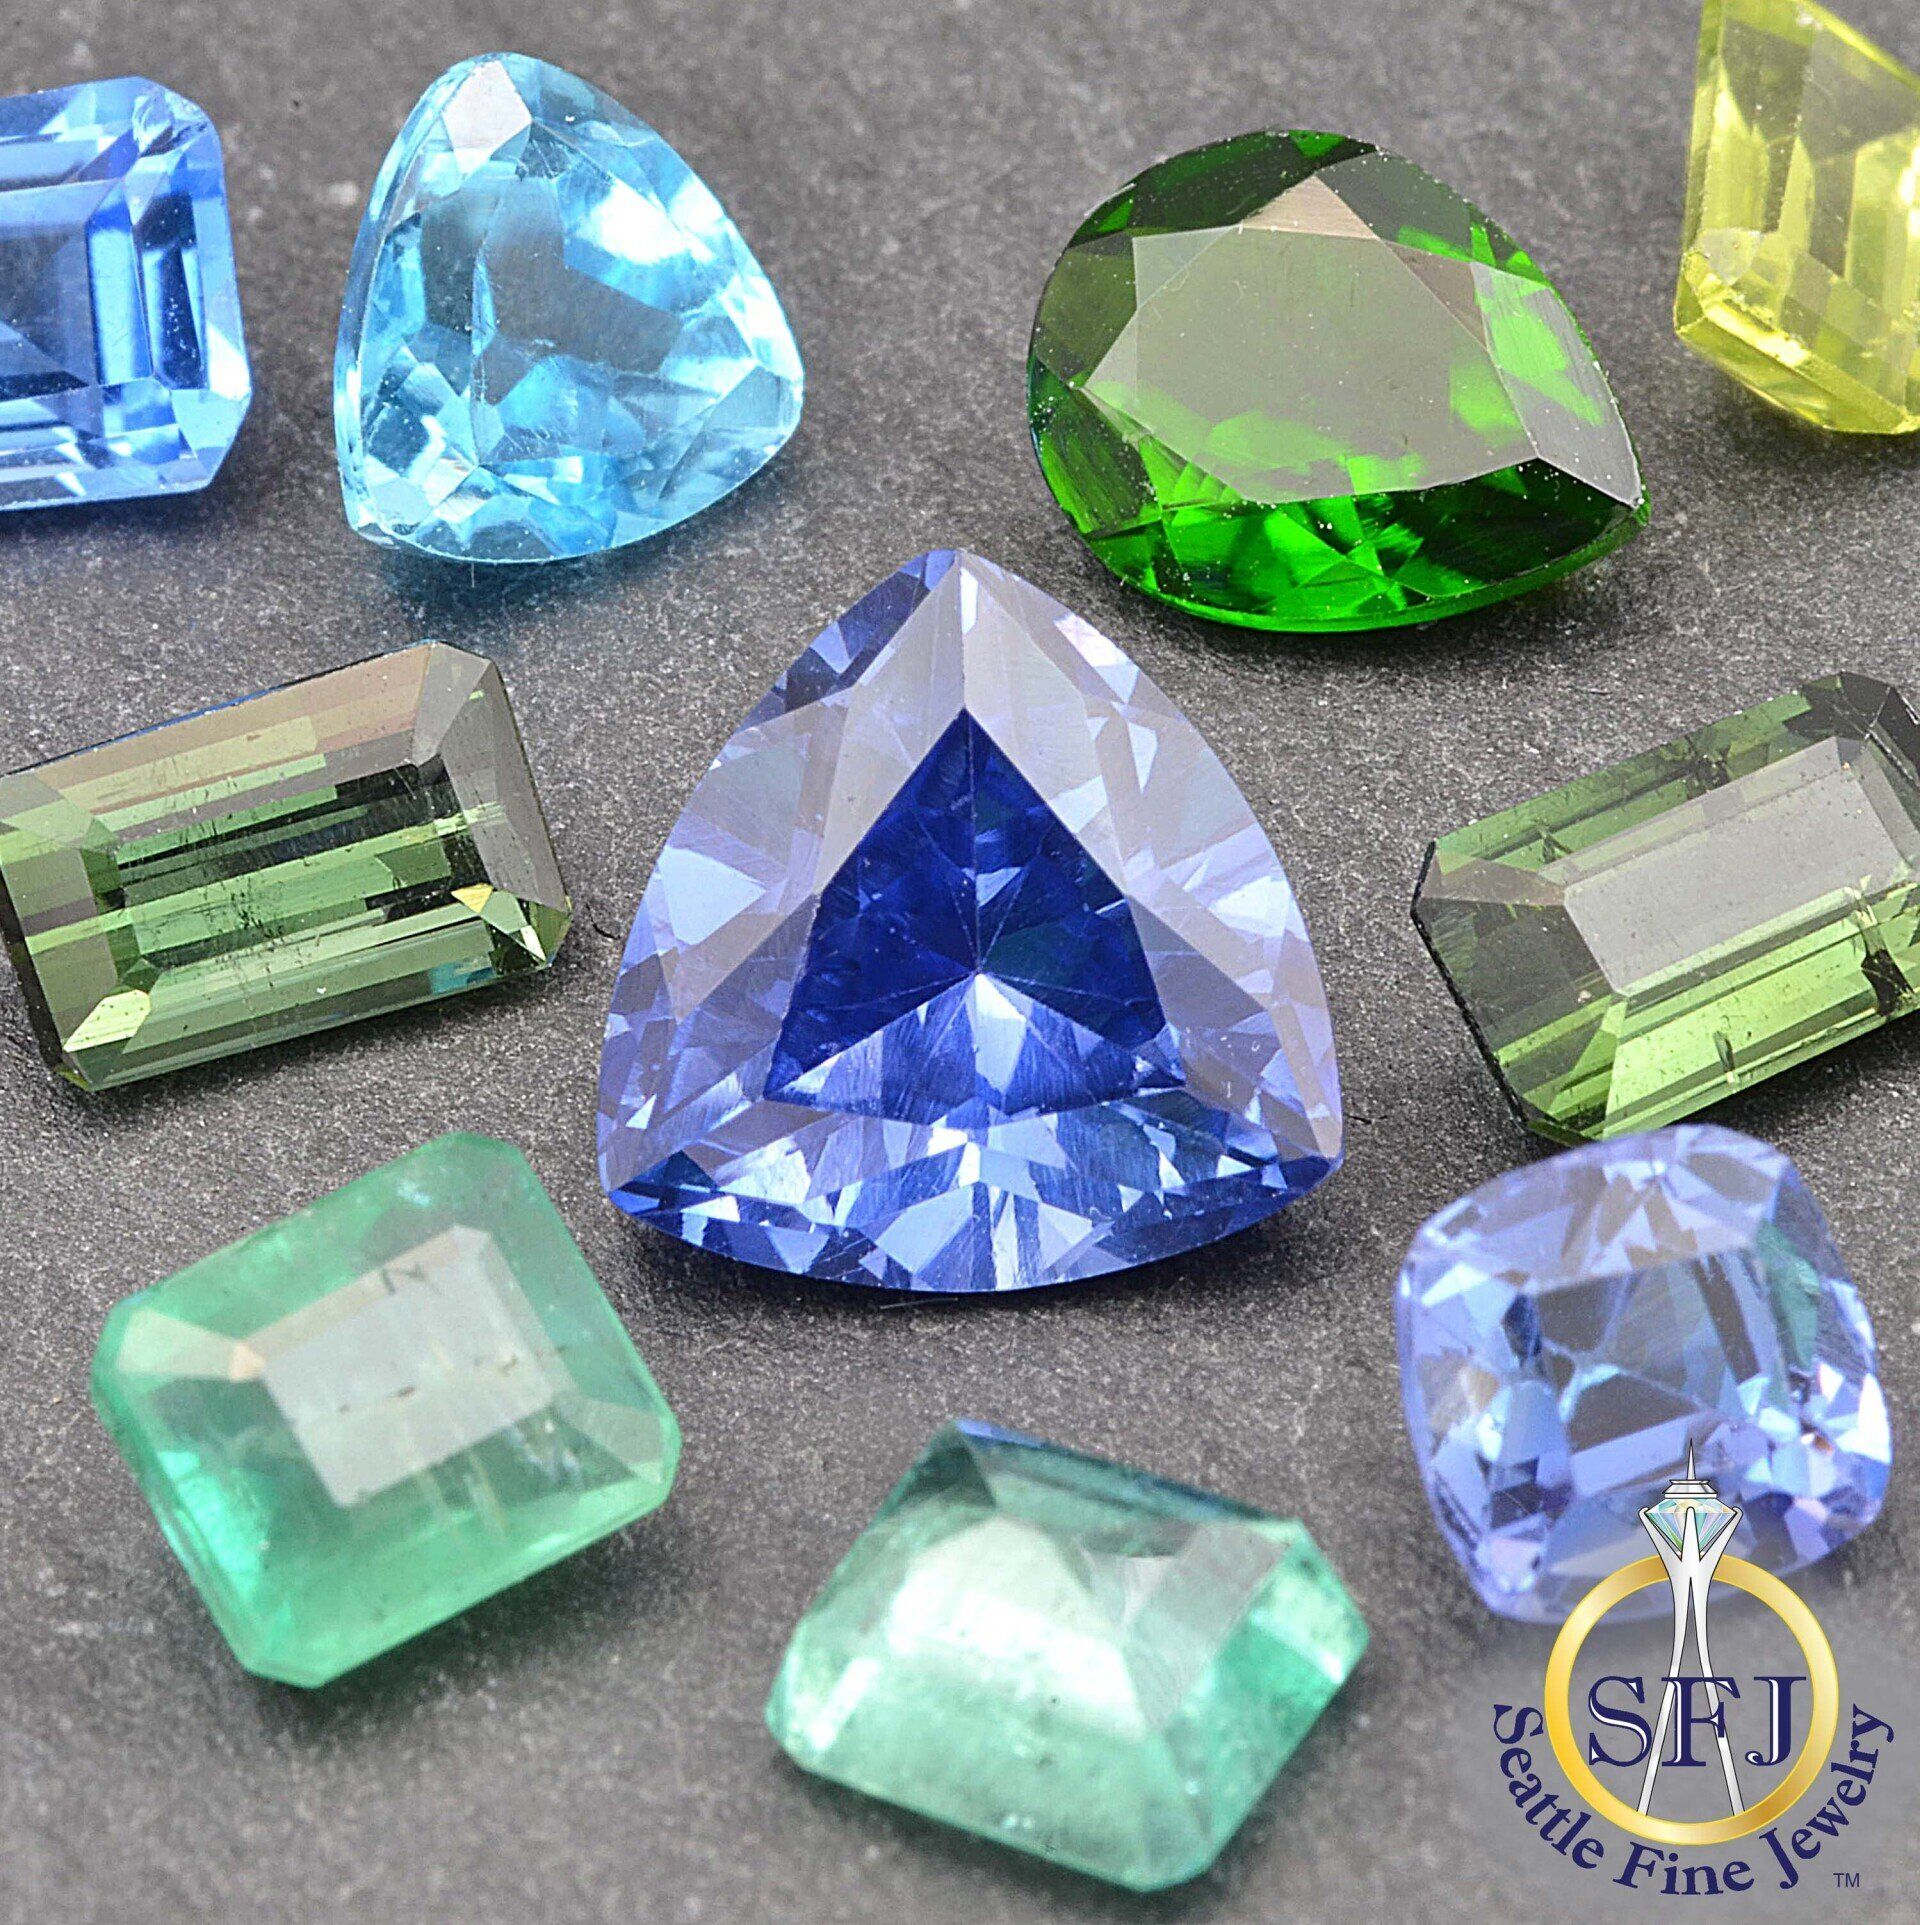 Loose gems loose gemstones sapphire peridot emerald chrome diopside tourmaline topaz tanzanite Seattle Fine Jewelry SFJ